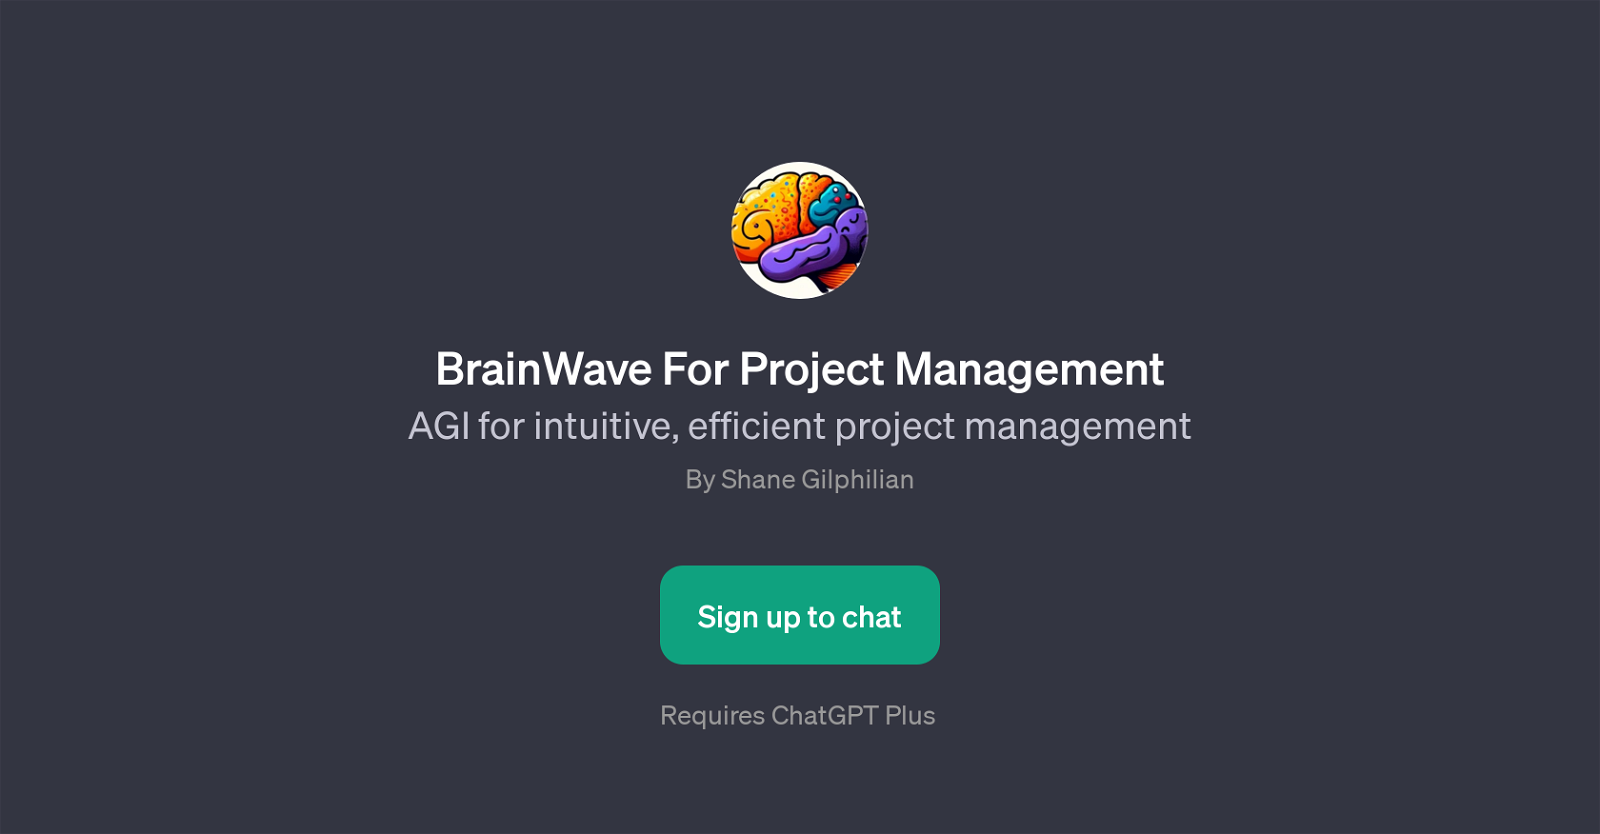 BrainWave For Project Management website